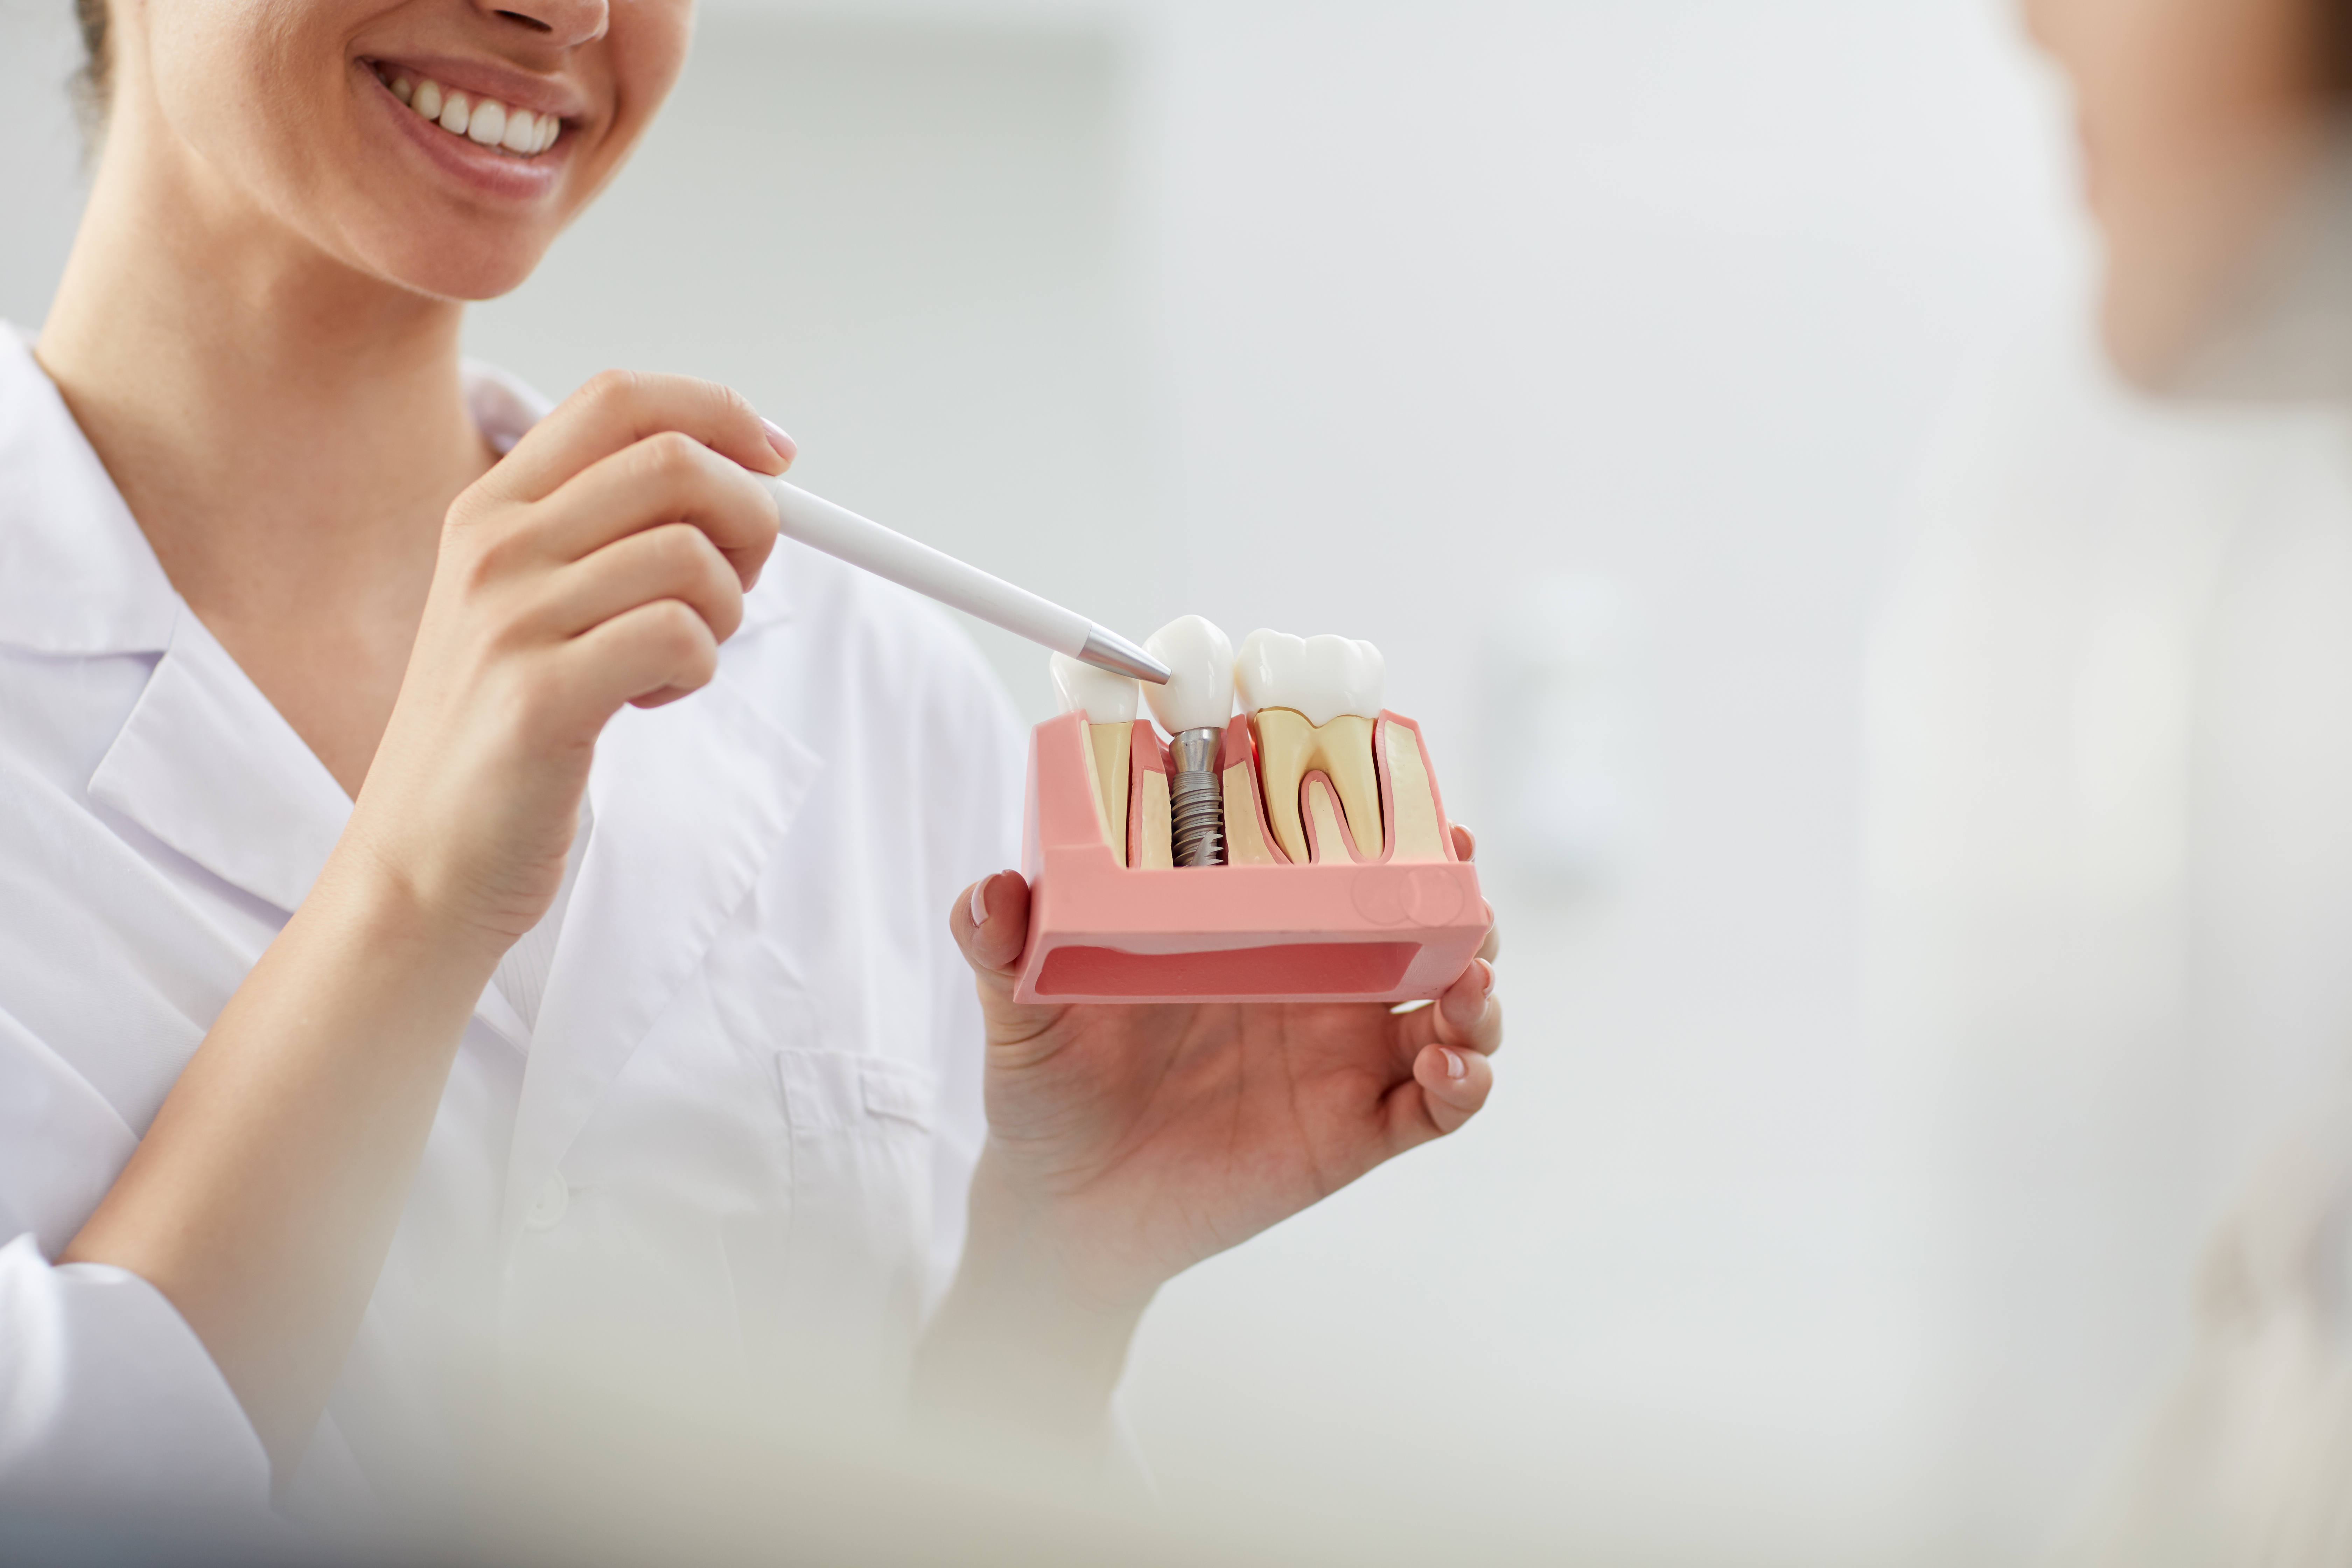 dentist showing implant model